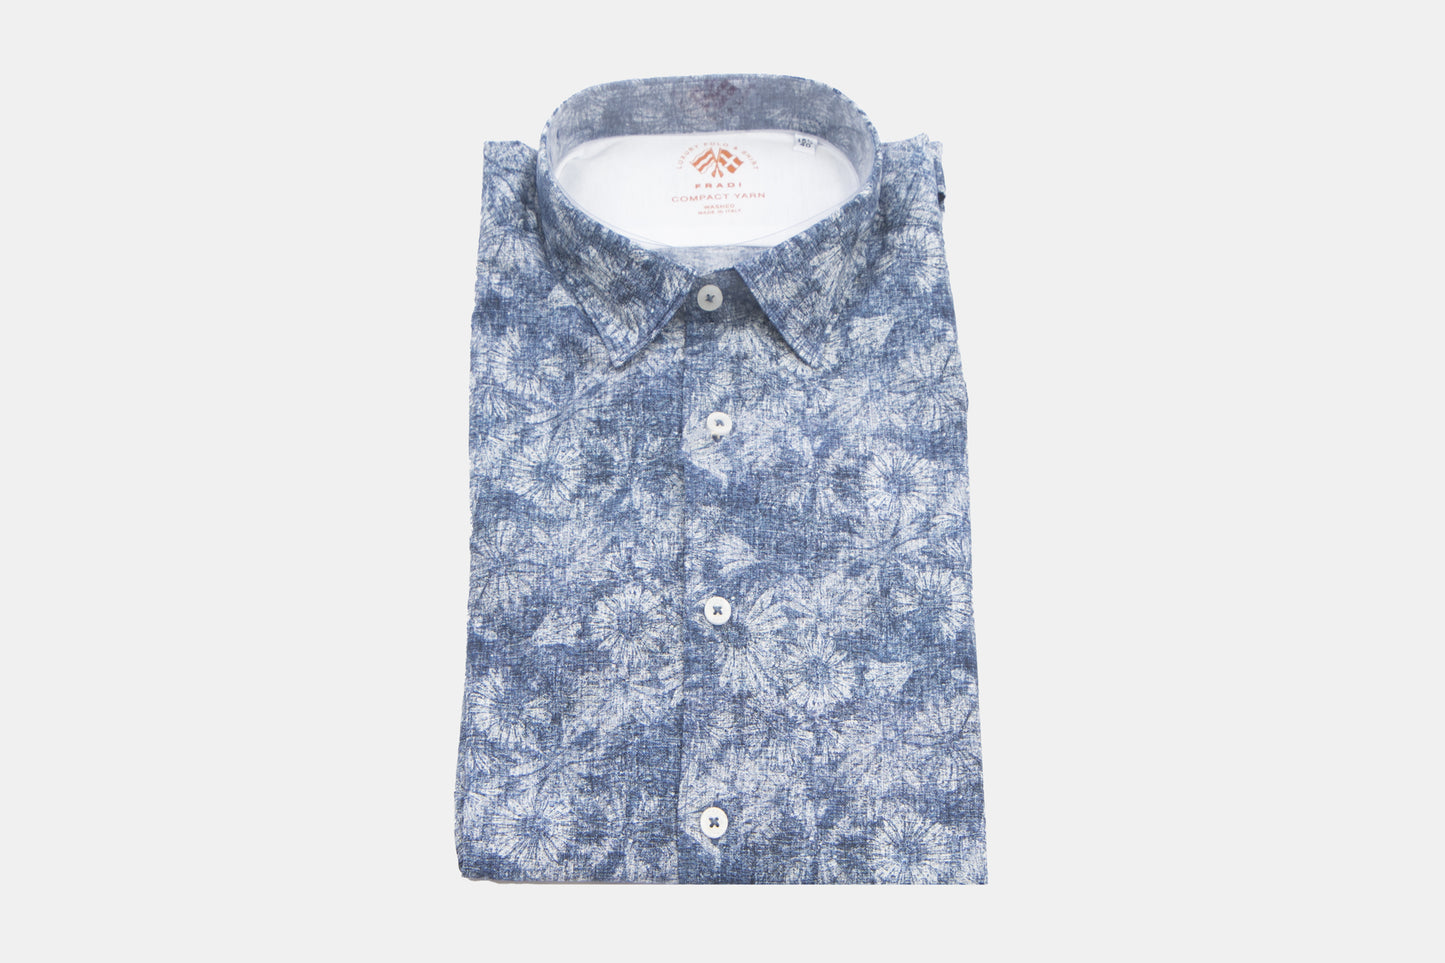 khakis of Carmel - floral pattern shirt